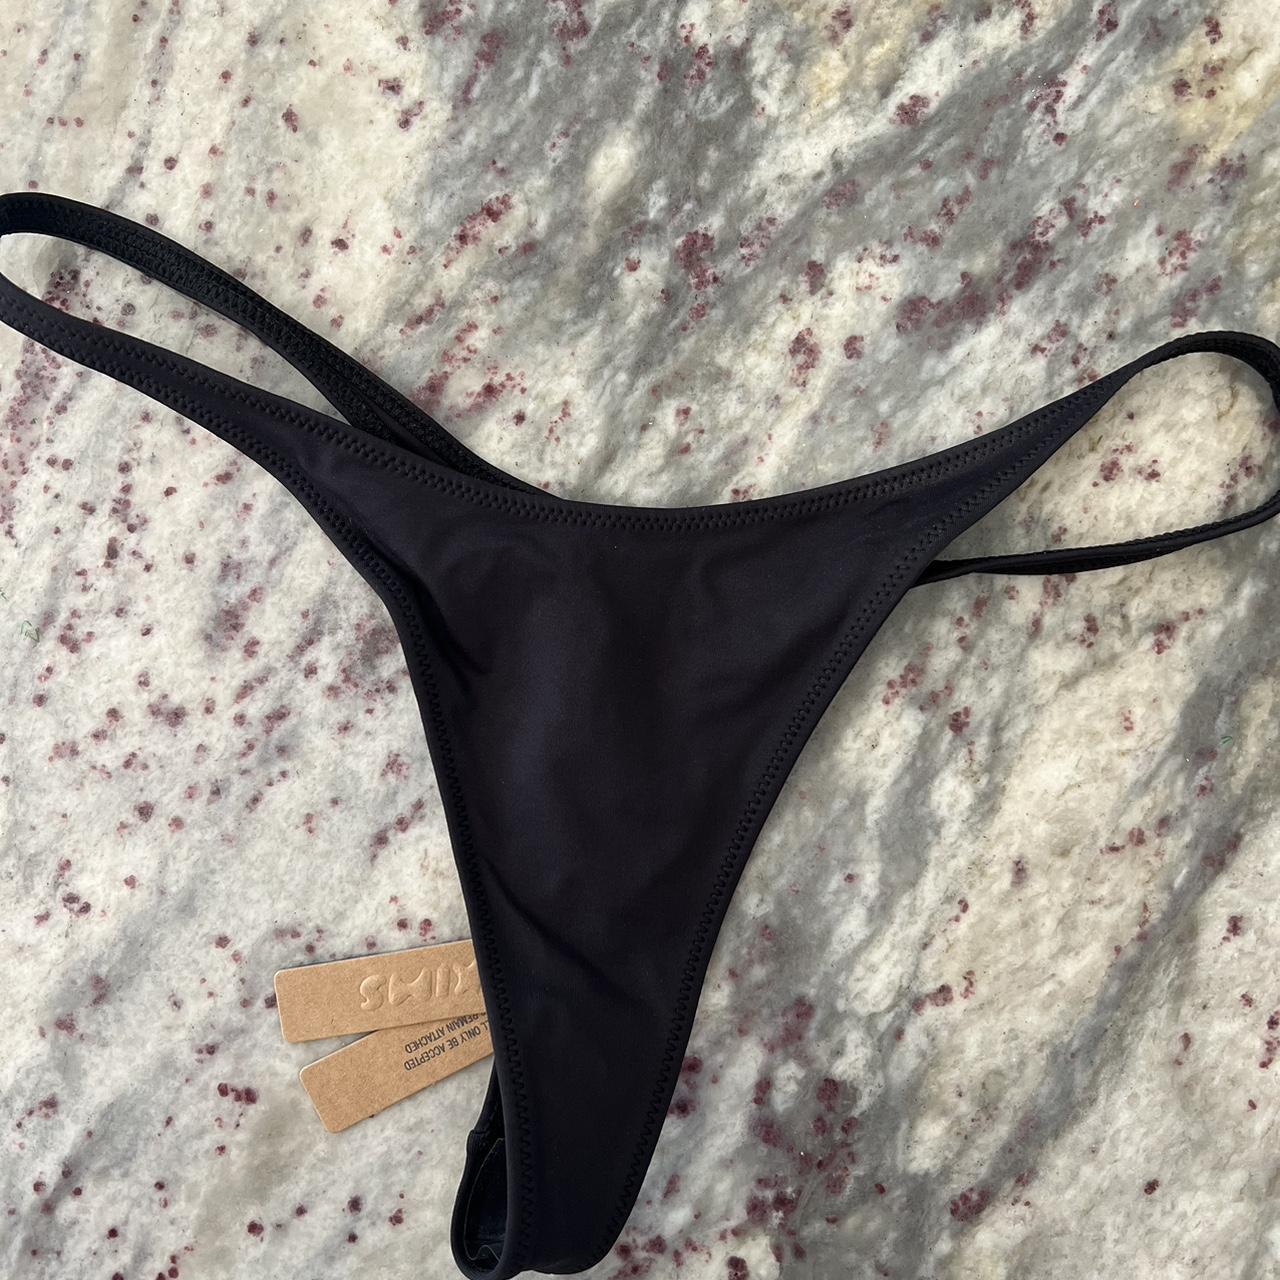 Skims black thong bikini bottoms - brand new - size S - Depop